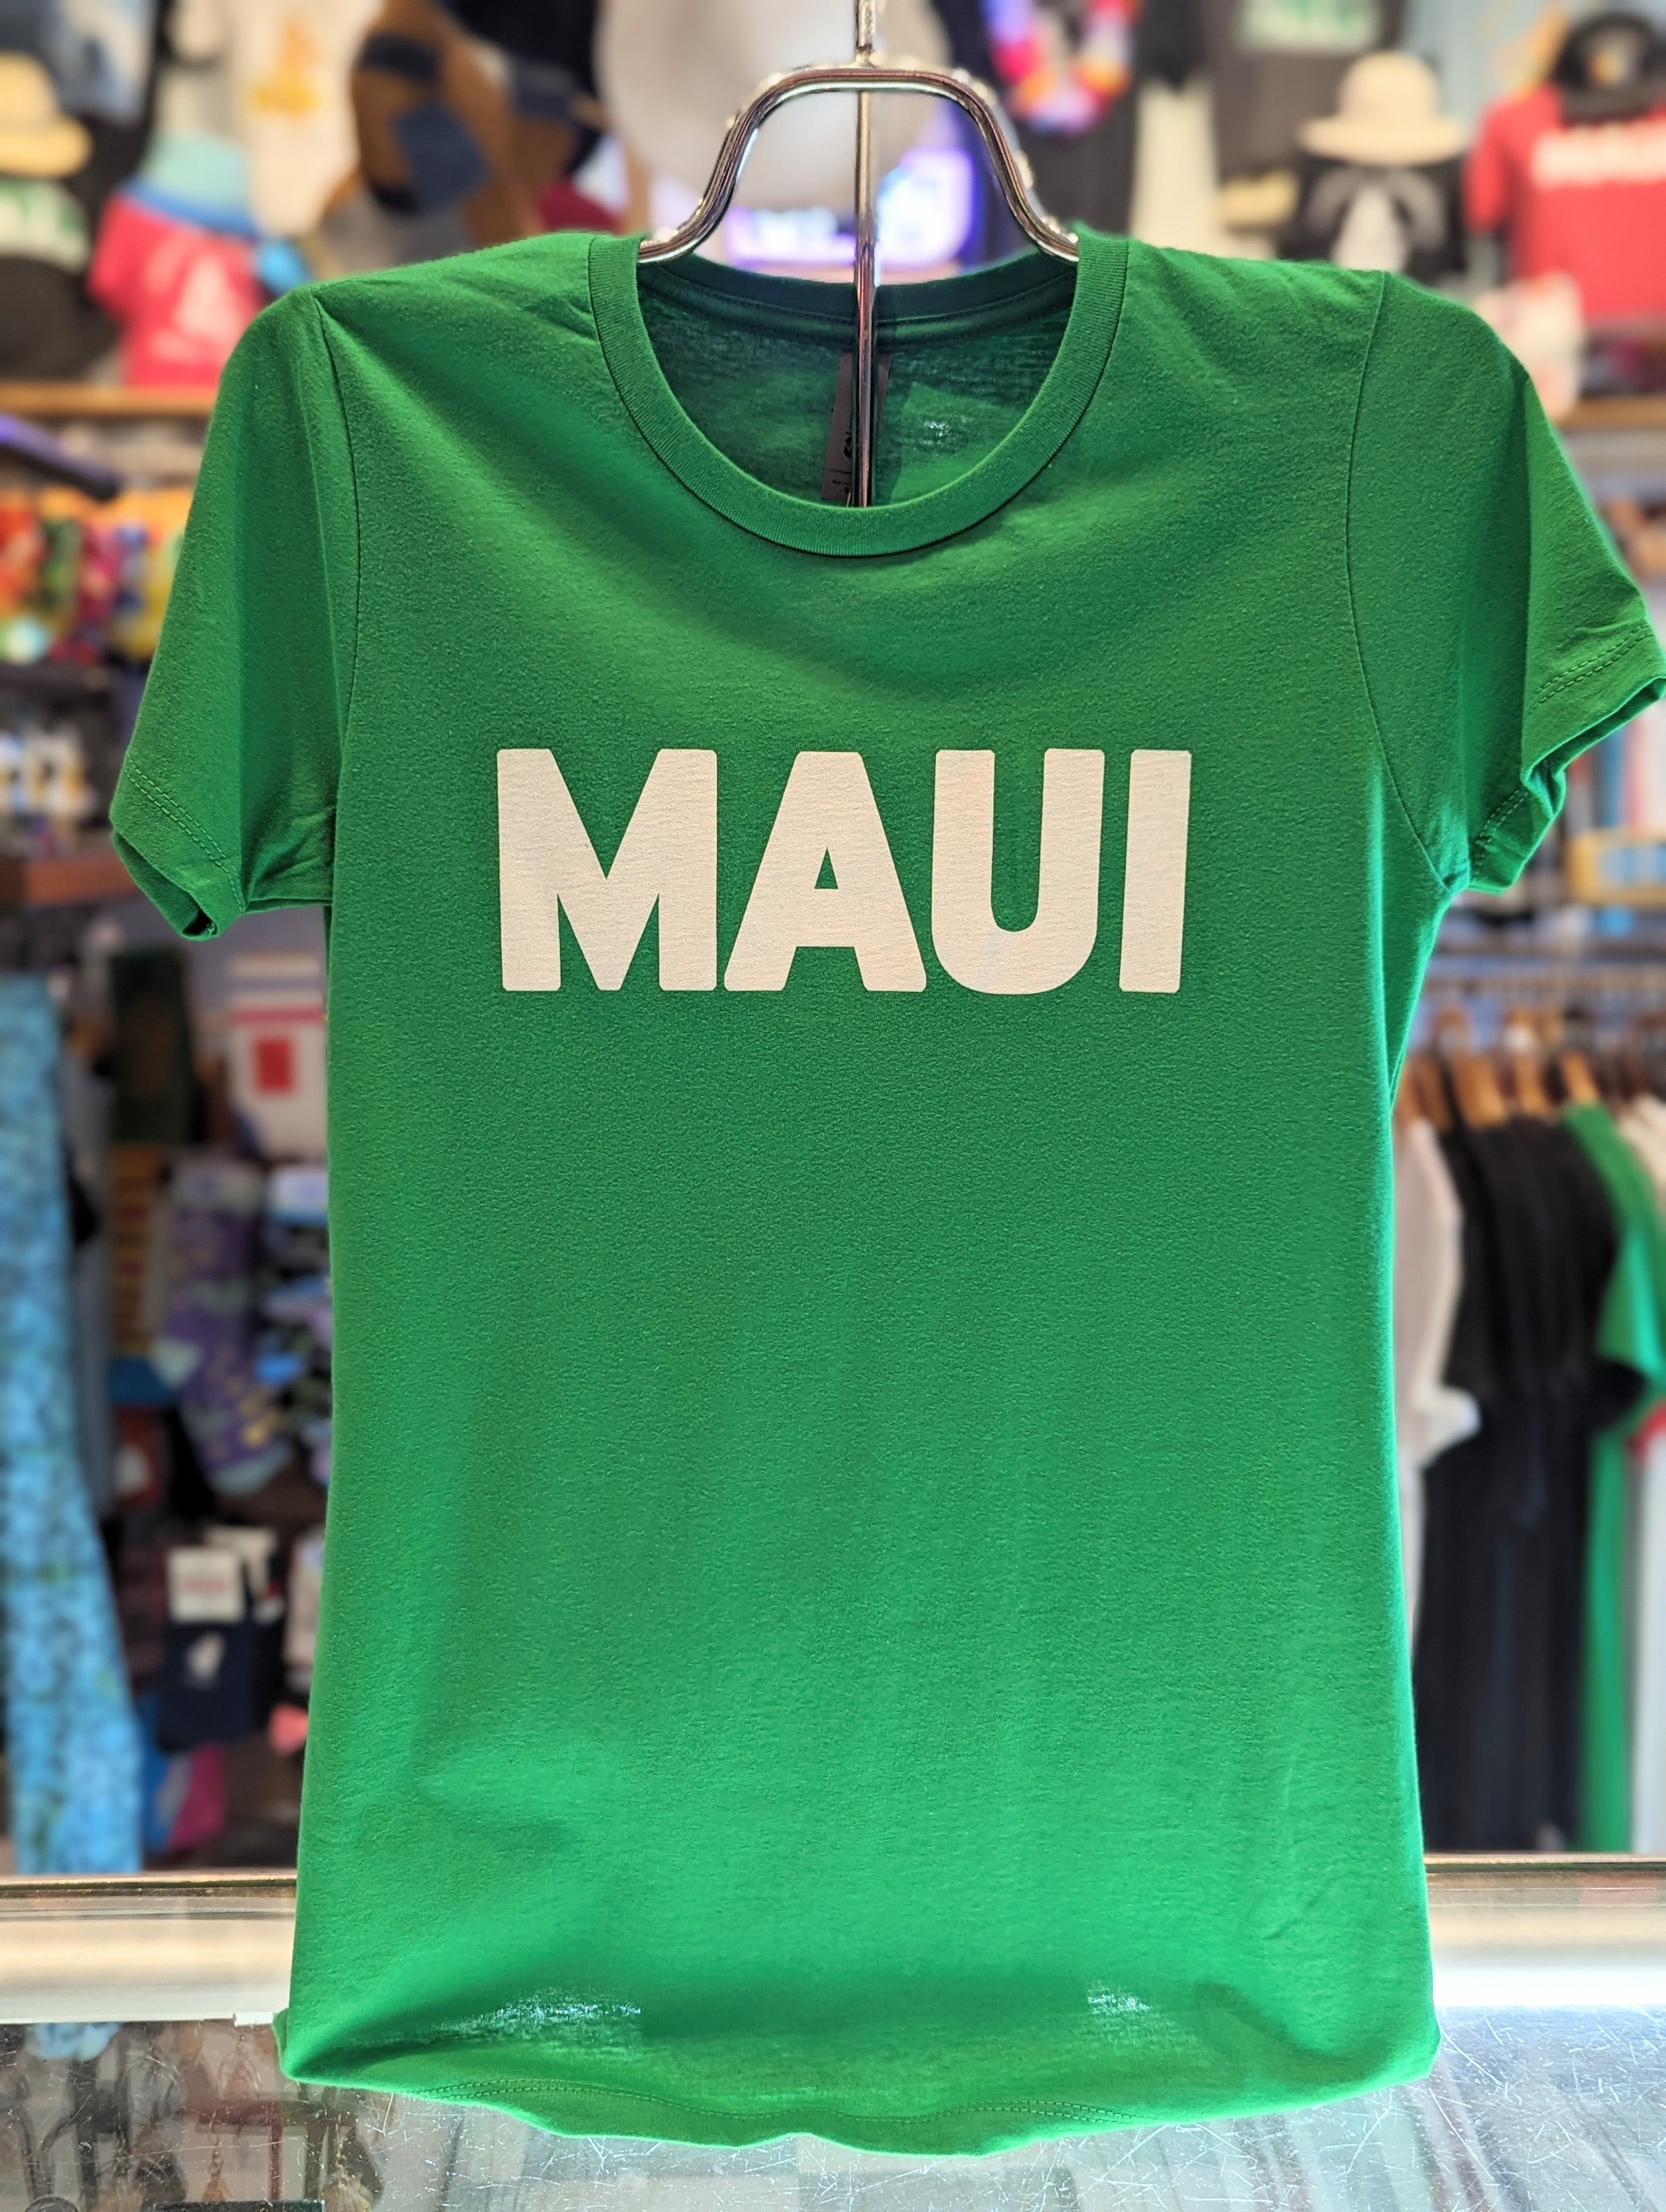 Women's Green "Maui" Tee